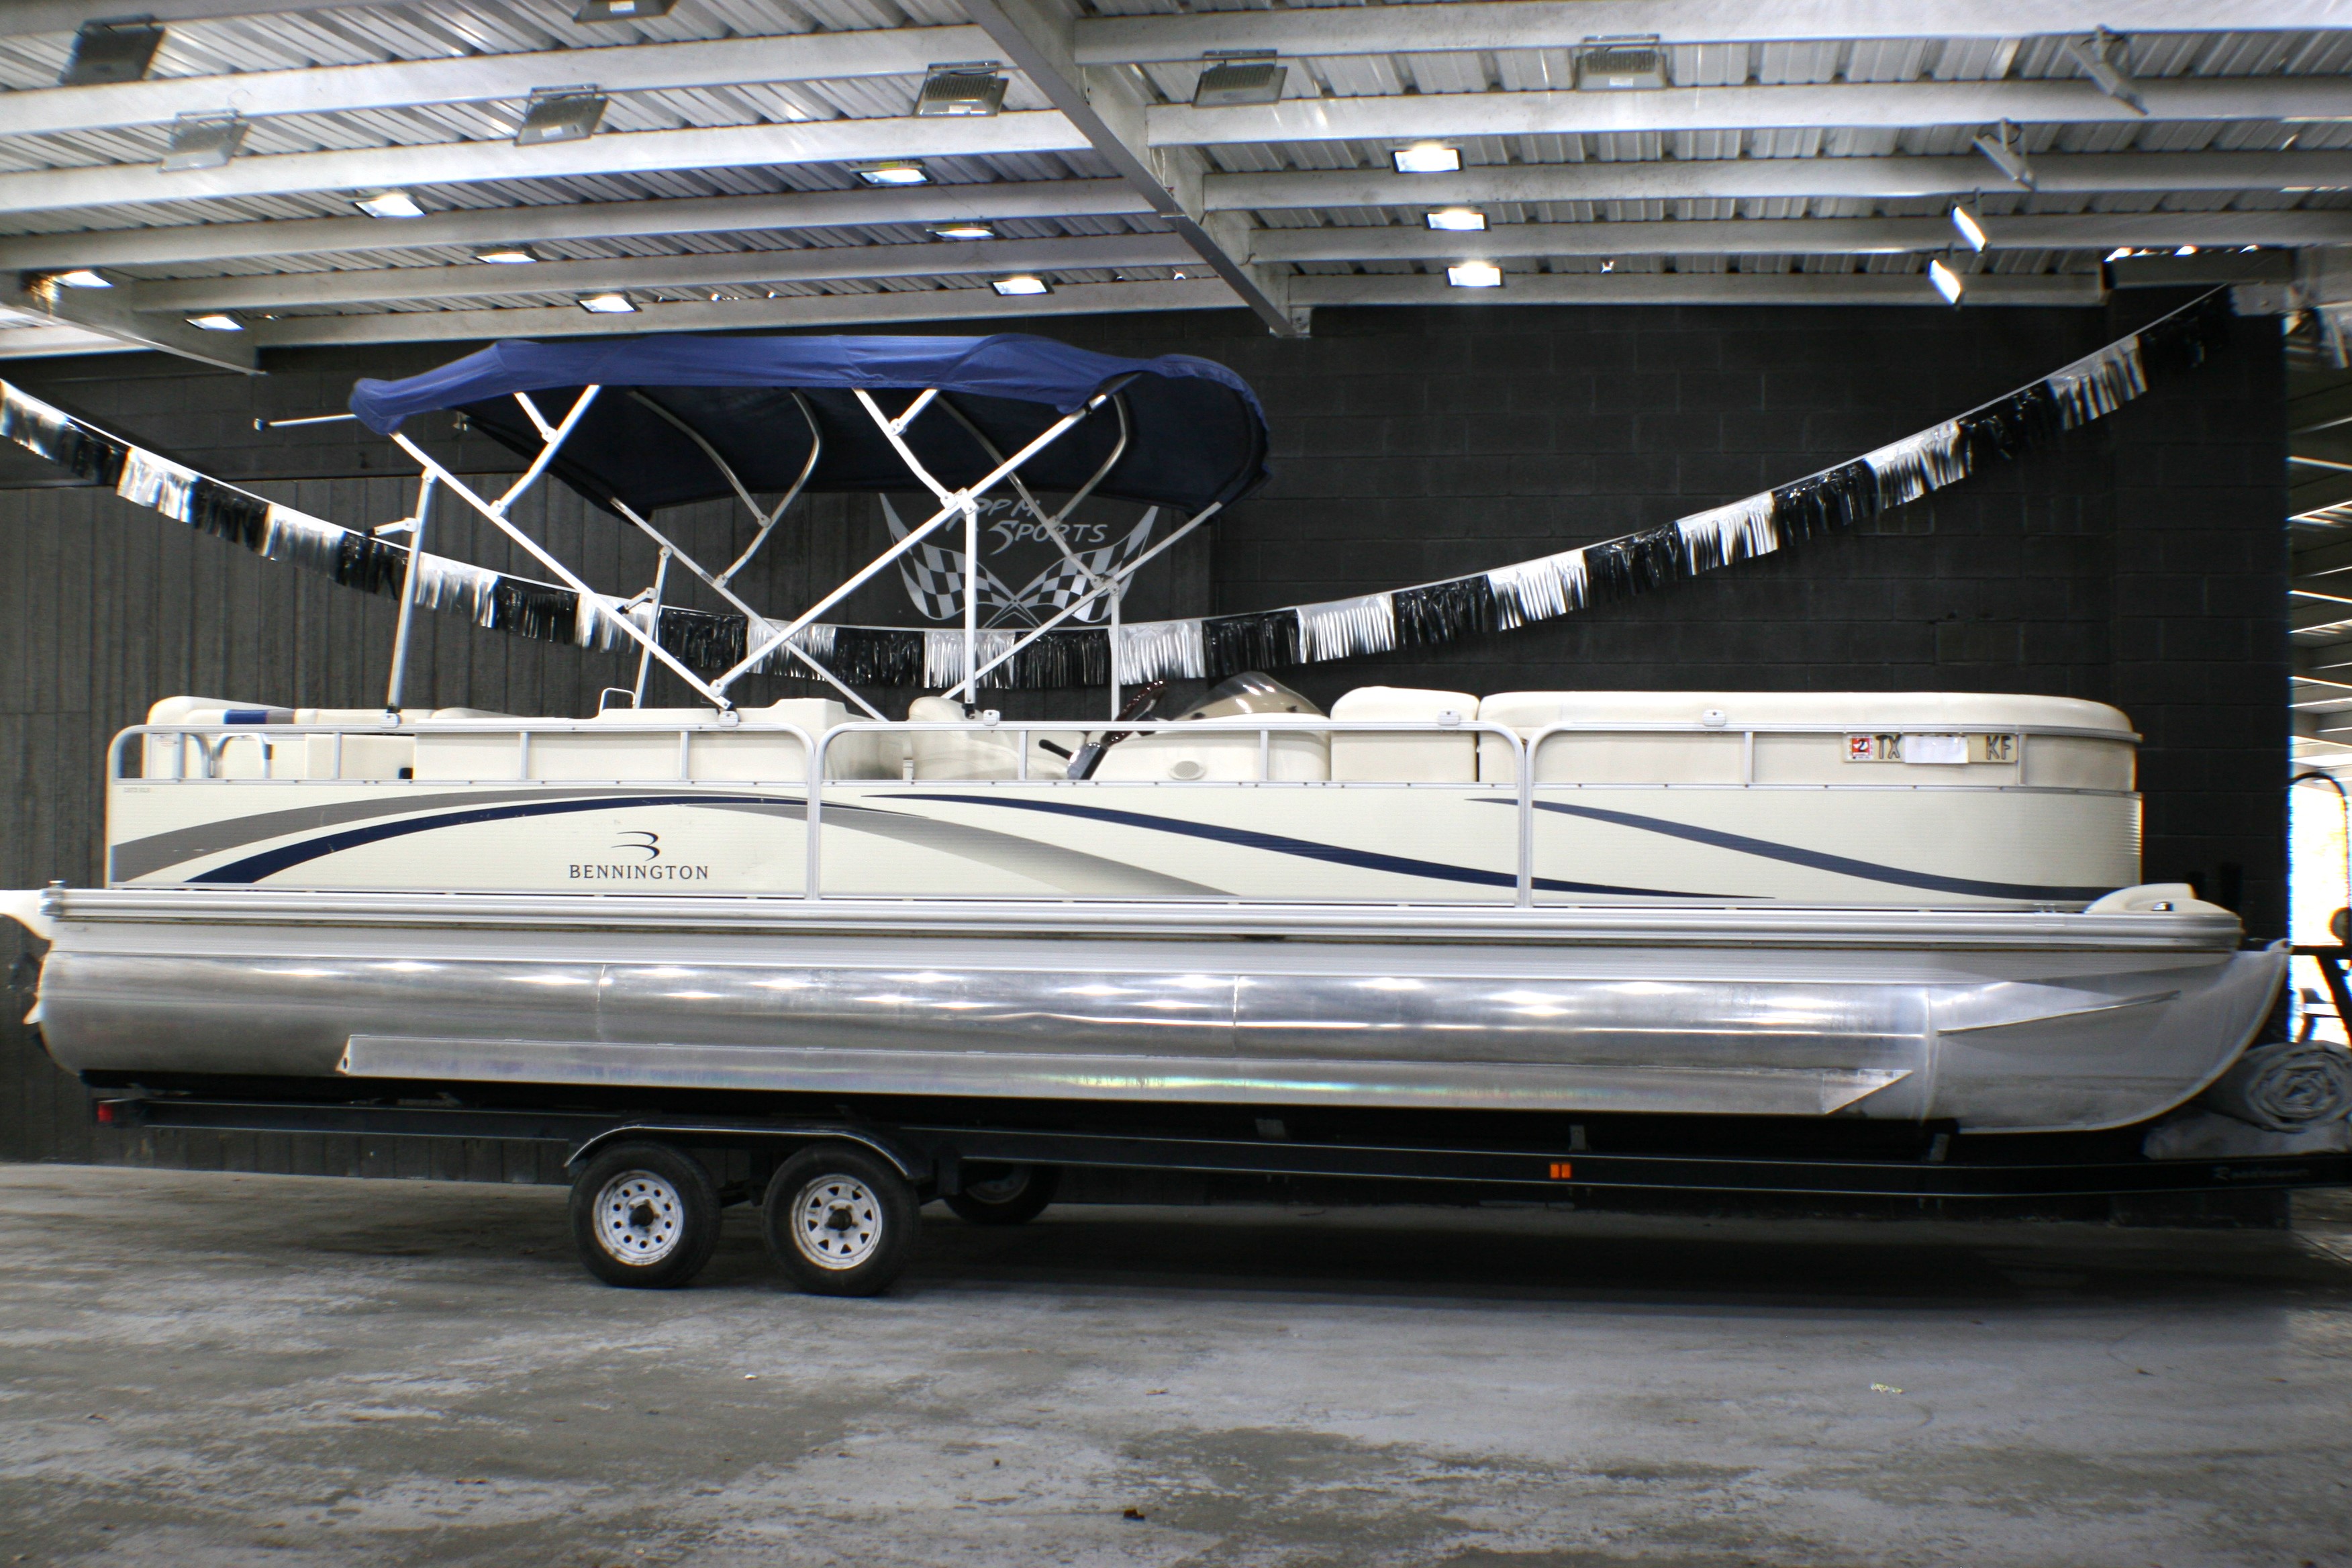 2005 Bennington 2875RLX Pontoon Boat for sale in McQueeney, TX - image 1 